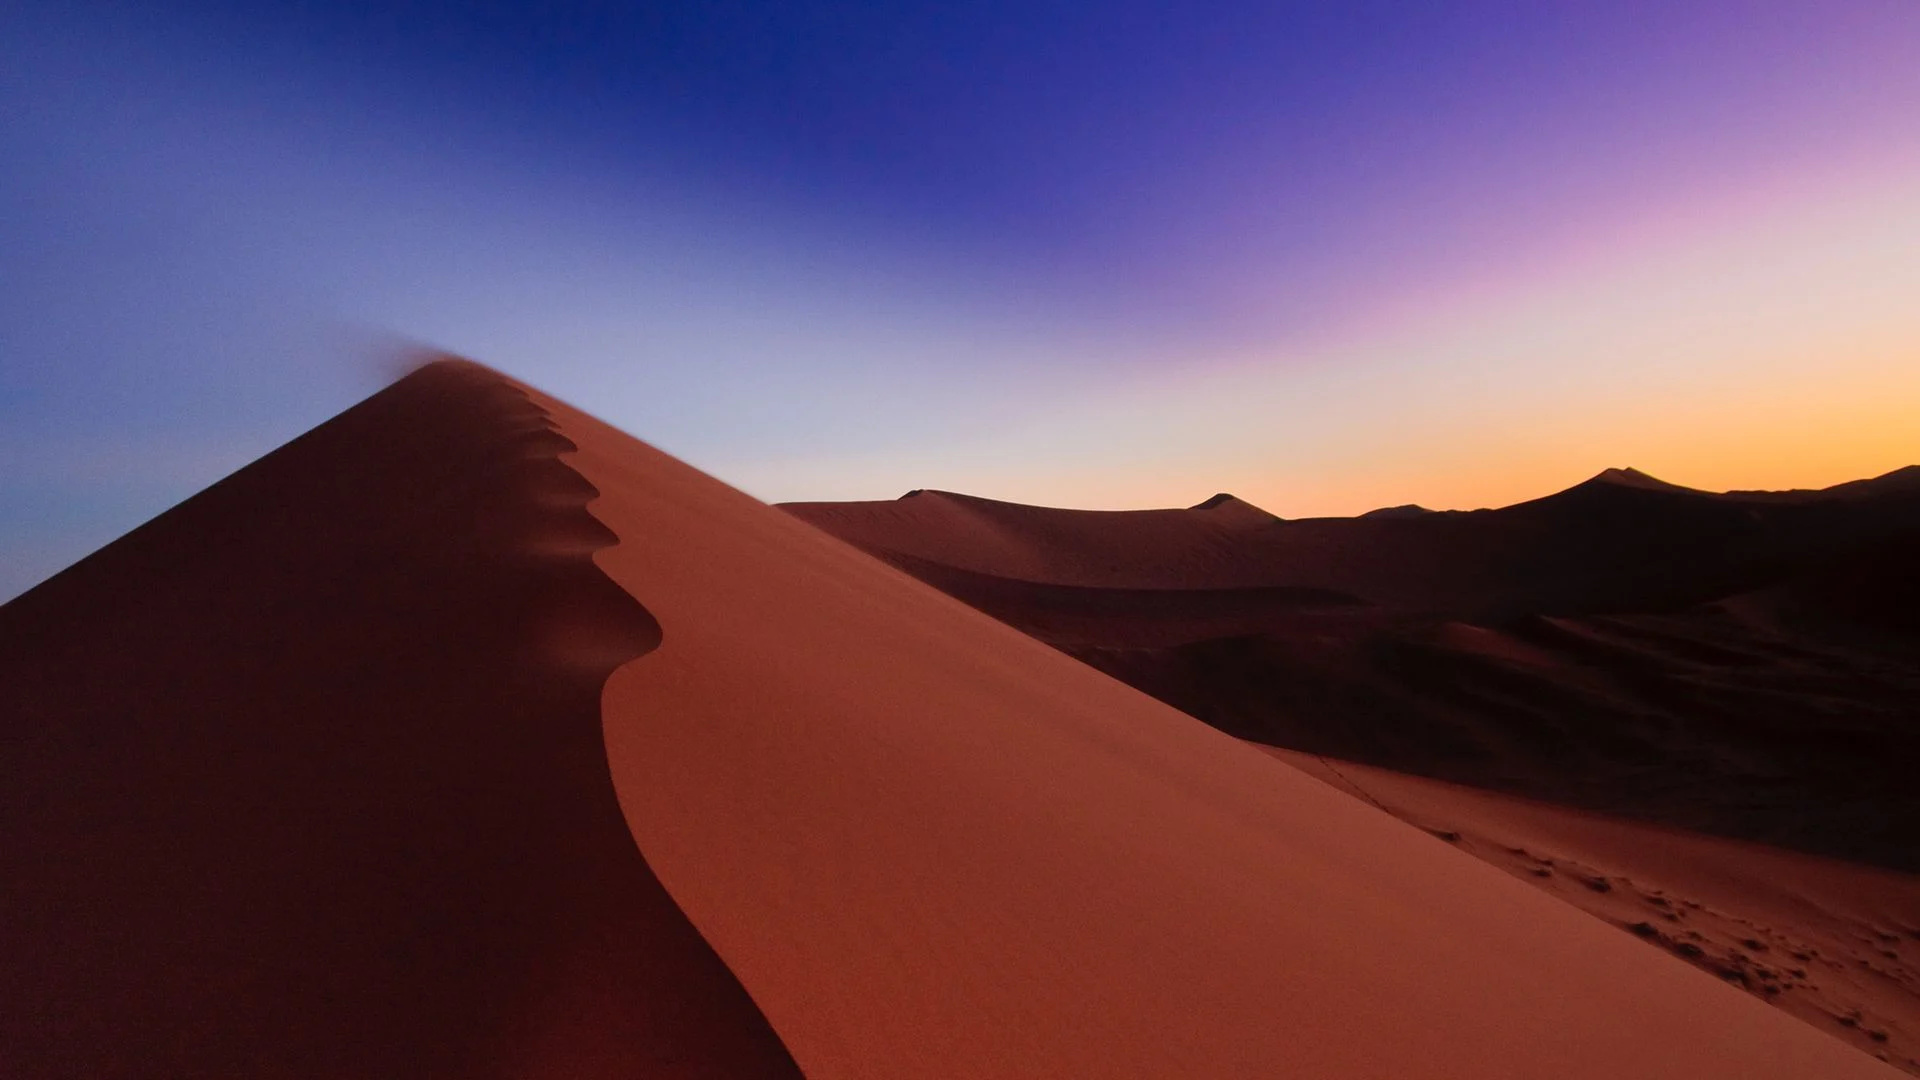 Arrakis, Dune artwork, HD quality, High-resolution prints, 1920x1080 Full HD Desktop